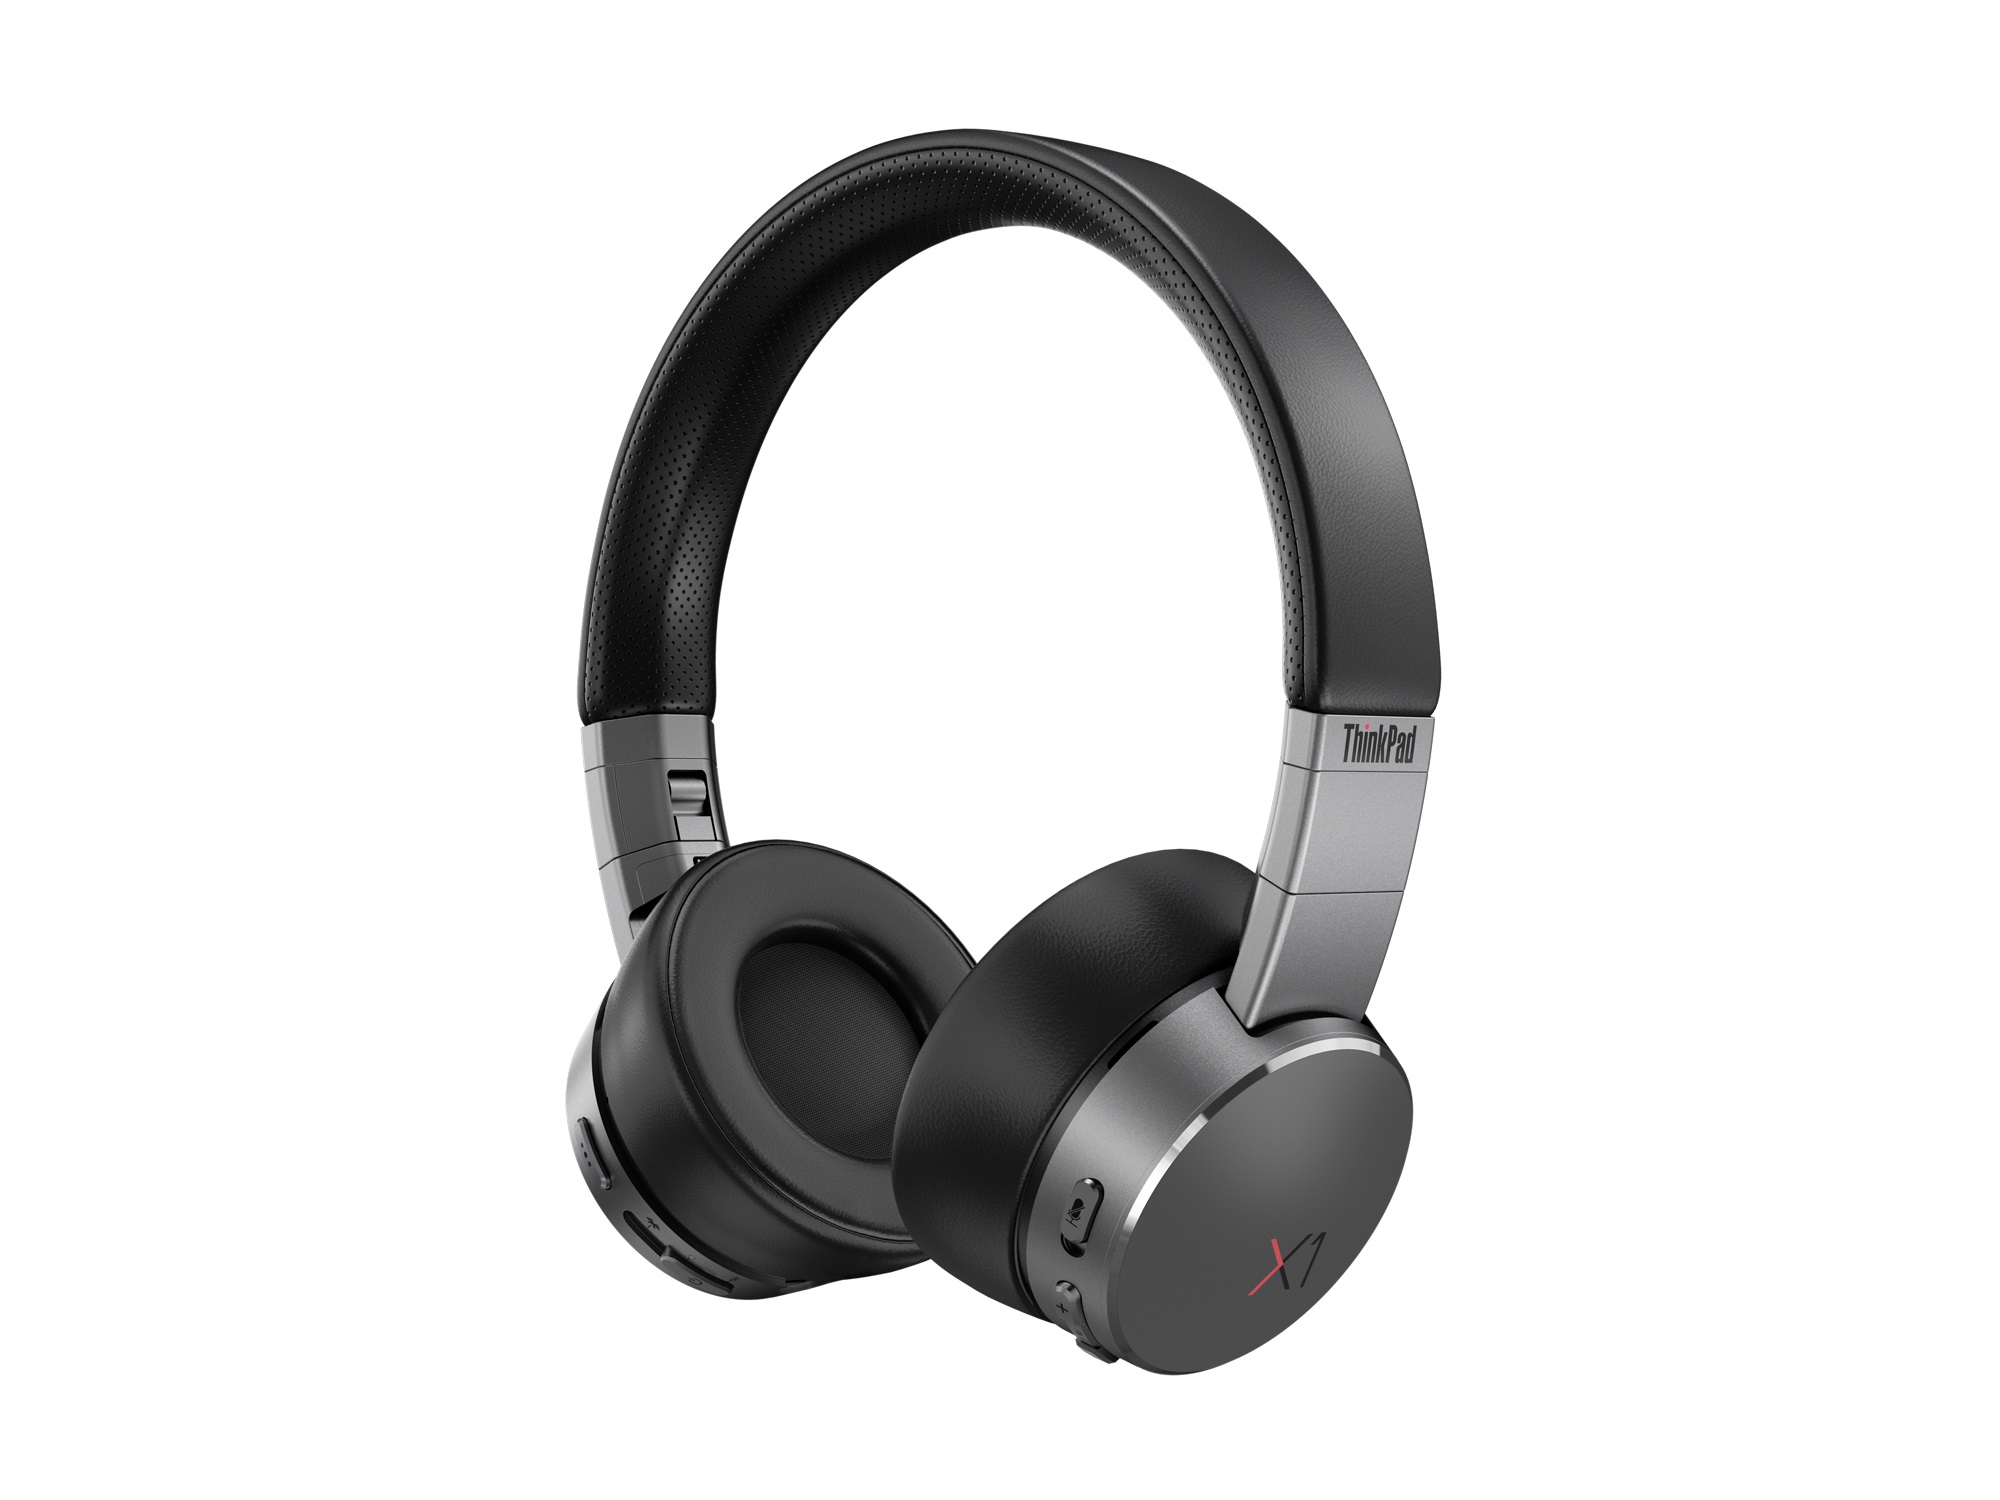 ThinkPad X1 Active Noise Cancellation Headphone